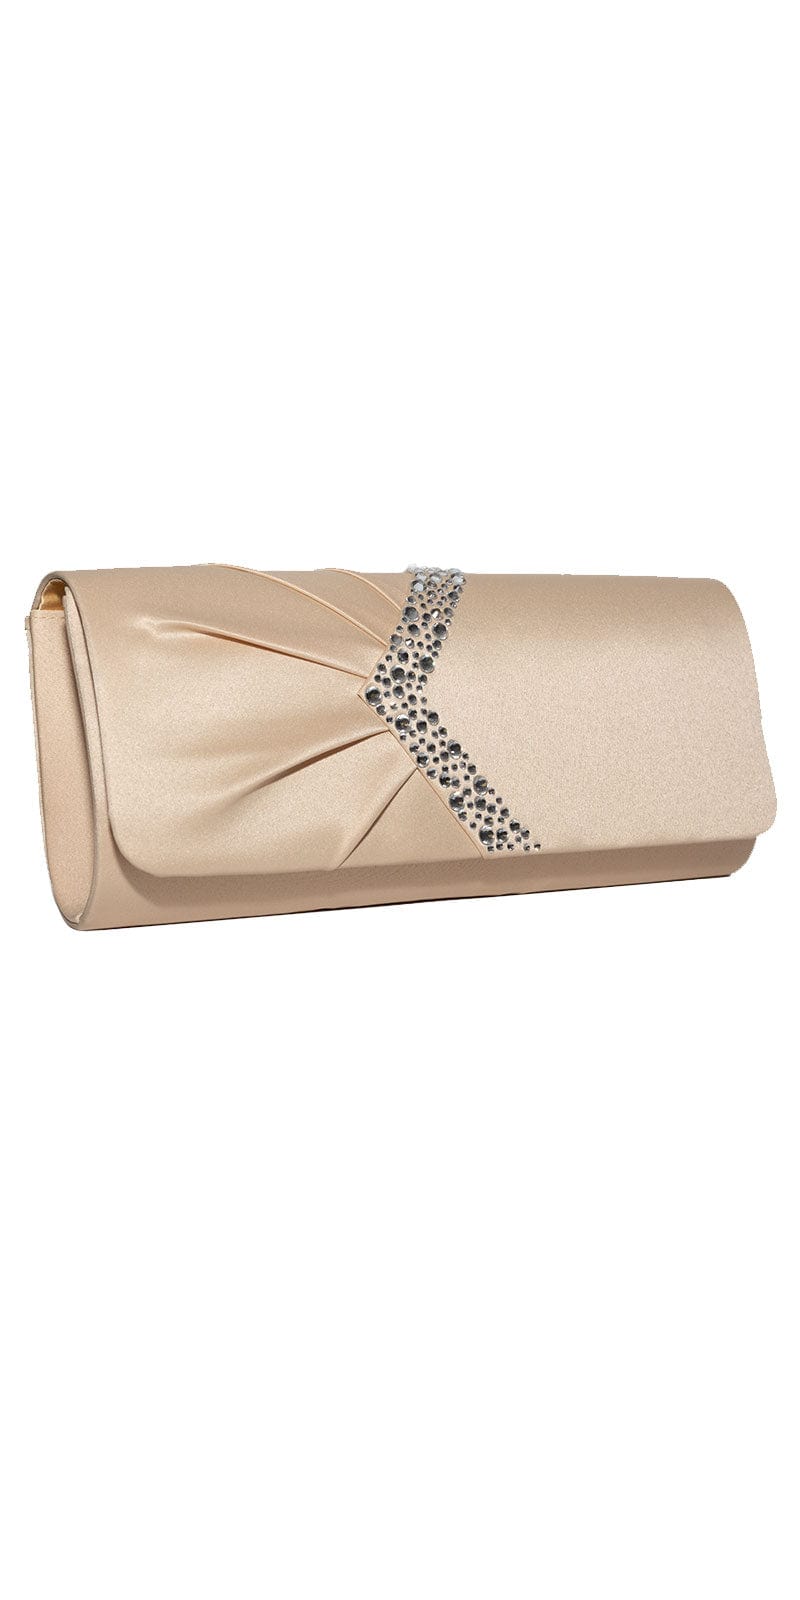 Camille La Vie Satin Envelope Handbag with Arrow Rhinestone Detail OS / nude